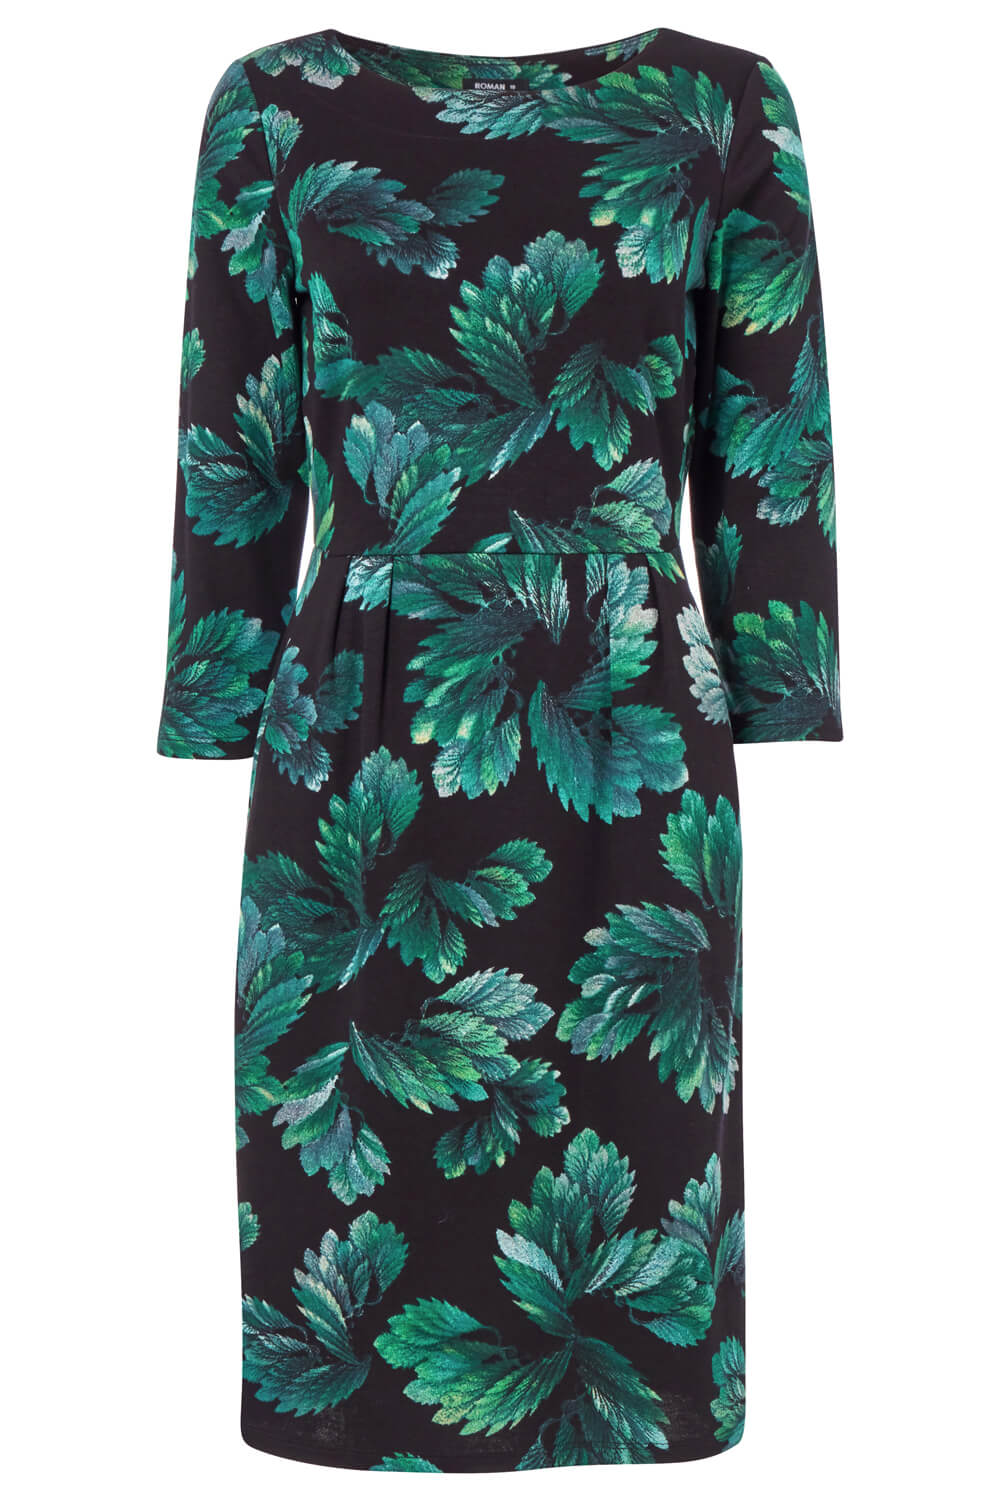 Green Floral Print Ponte Dress, Image 5 of 5